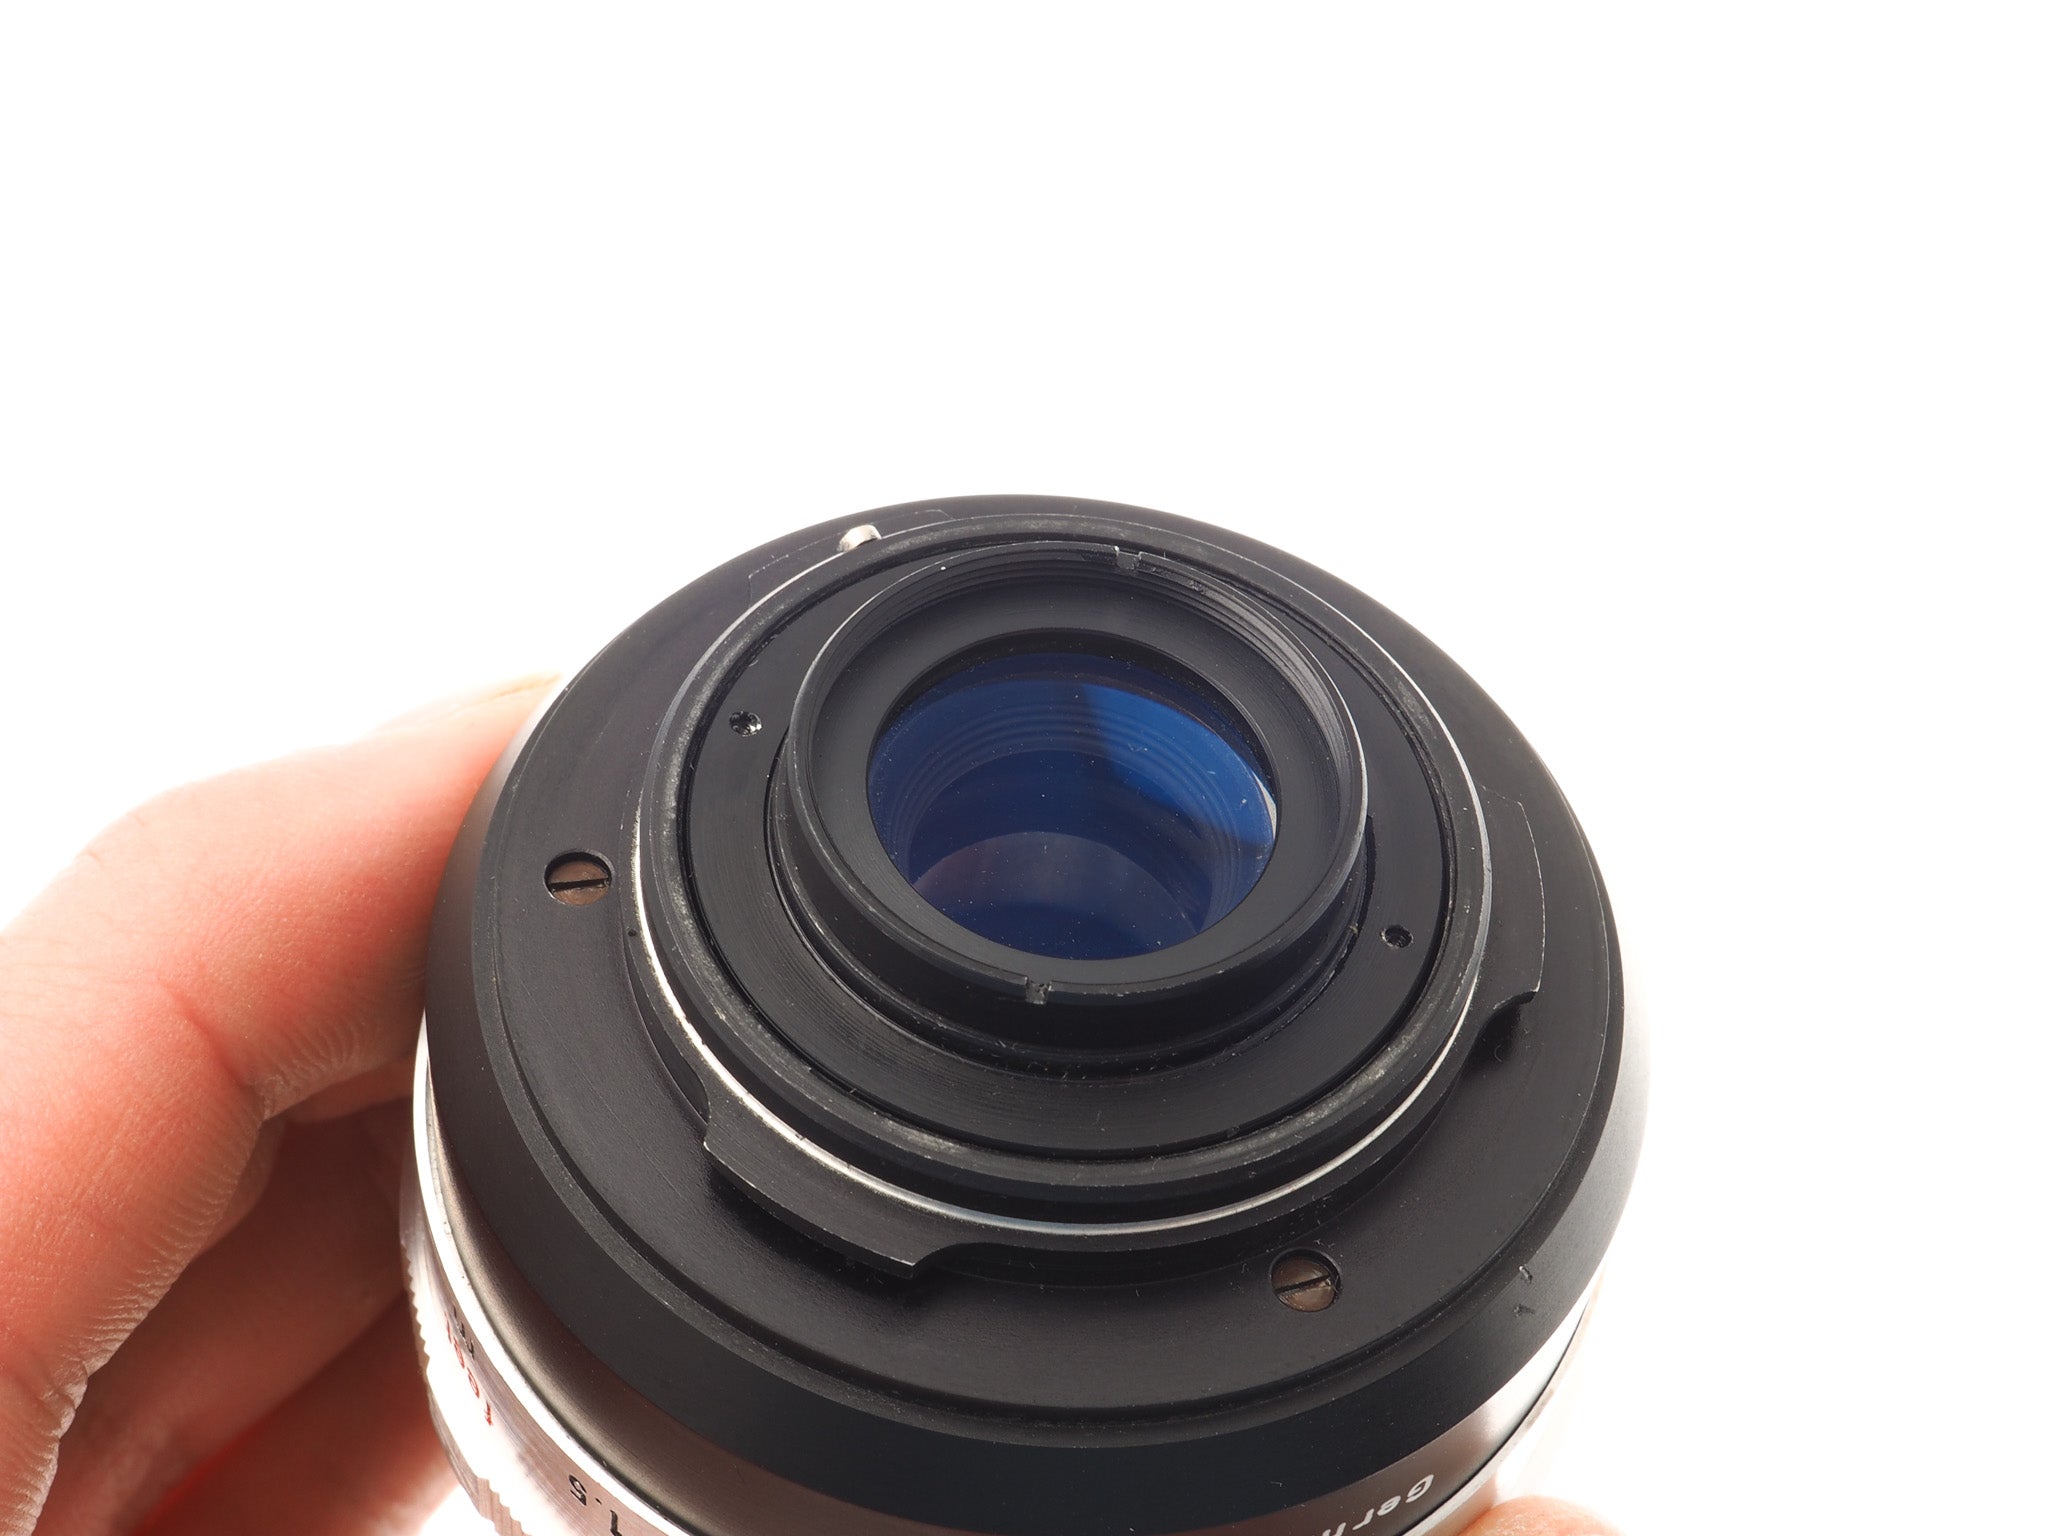 Meyer-Optik Gorlitz Telefogar 90mm f3.5 - レンズ(単焦点)